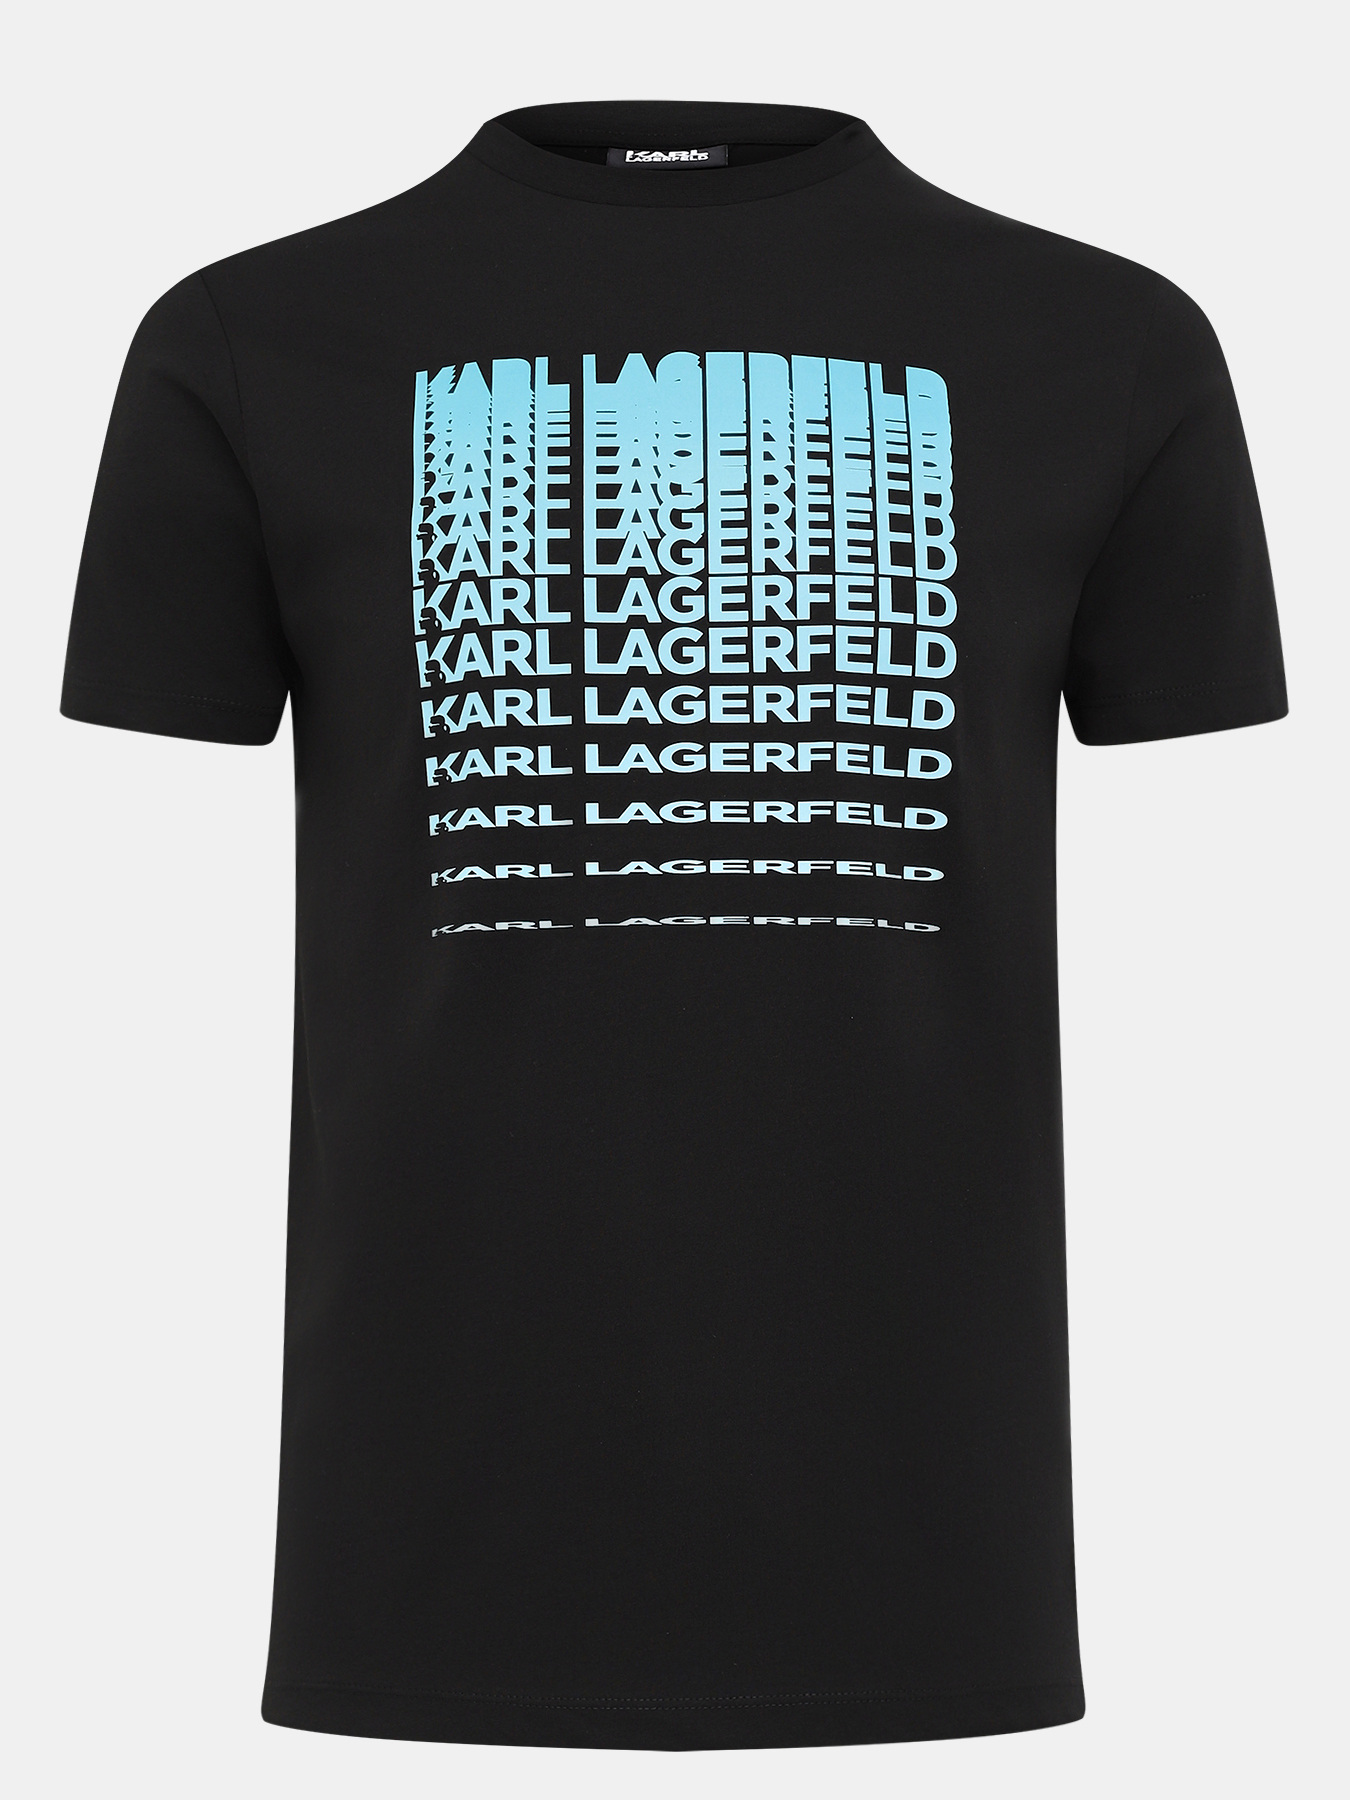 Karl Lagerfeld футболка мужская. Футболка Karl Lagerfeld мужская черная. Футболки лагерфельд купить